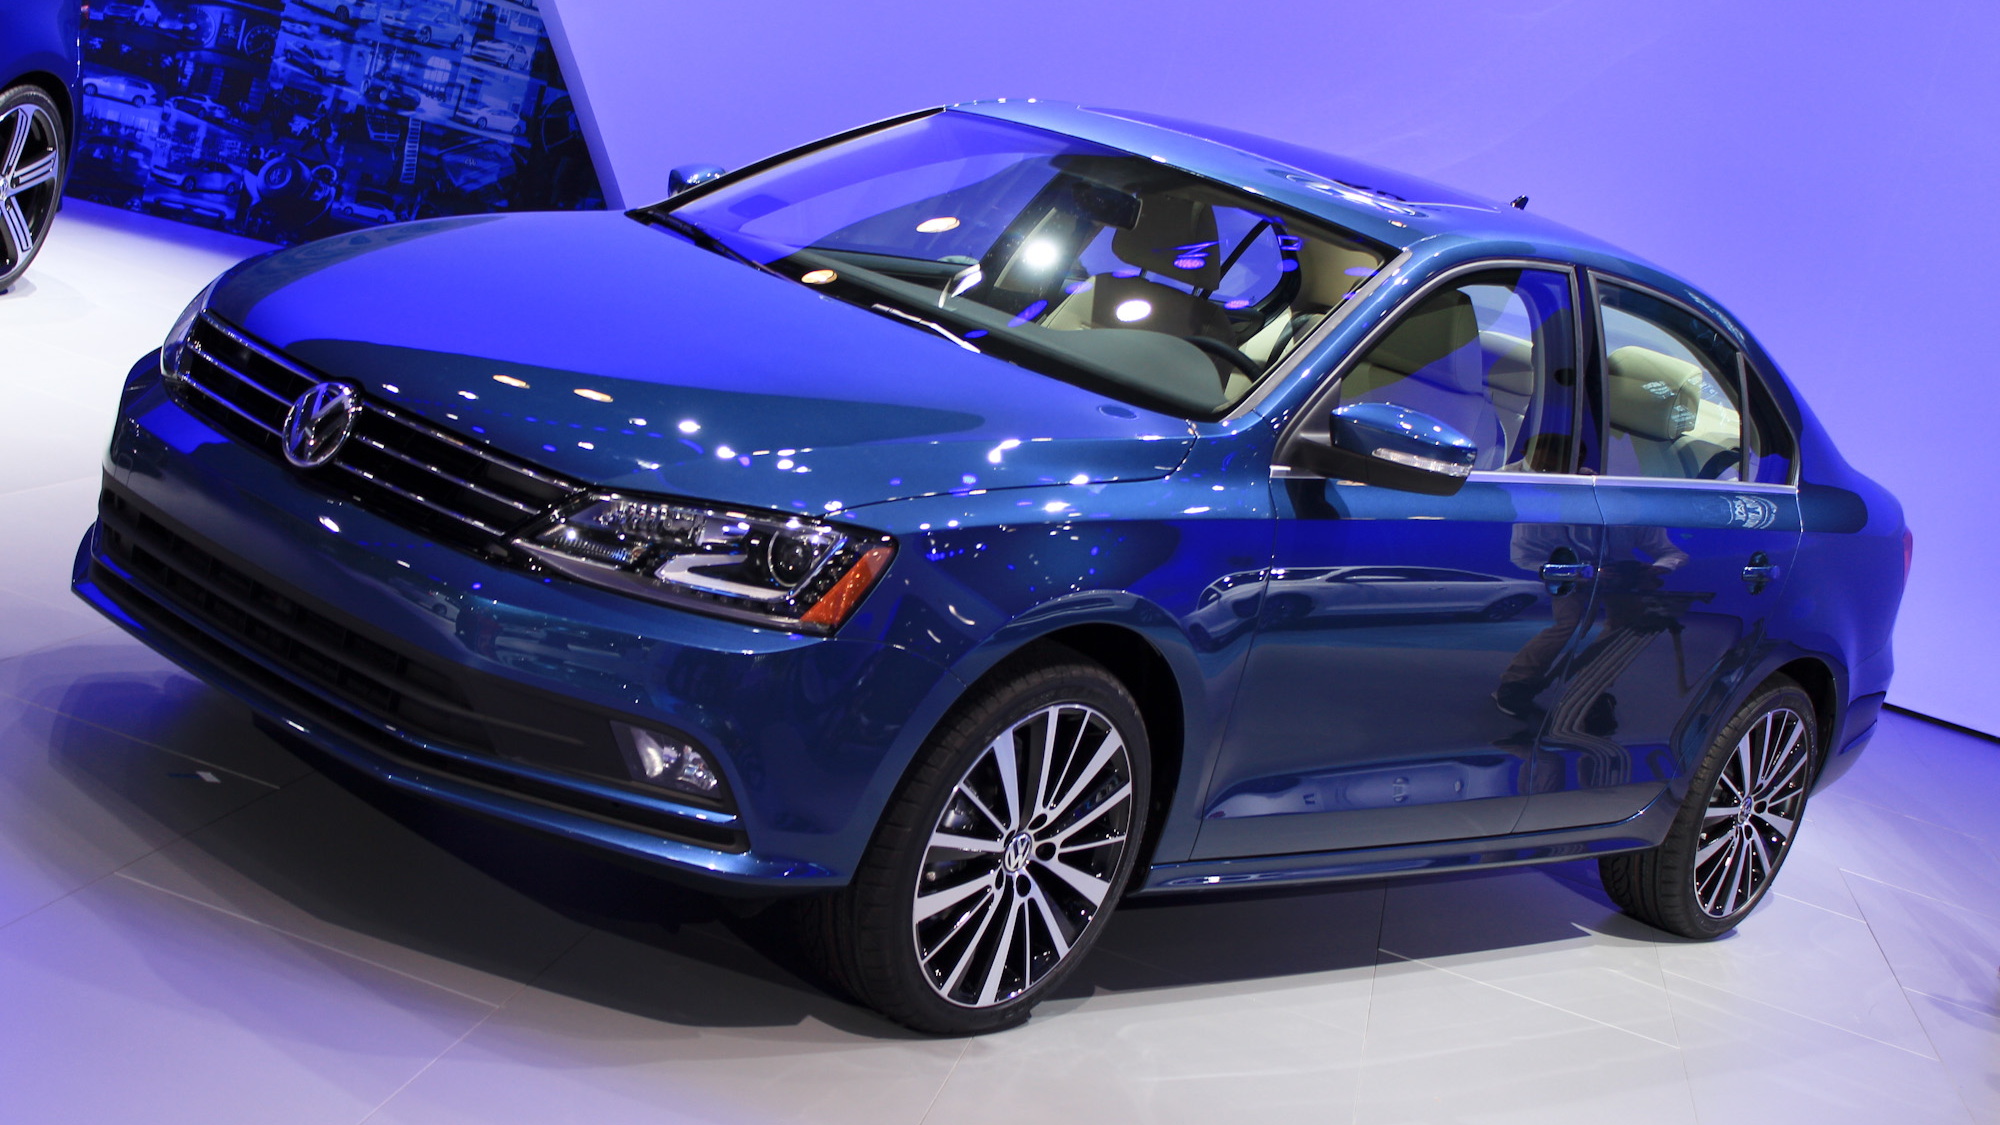 2015 Volkswagen Jetta TDI, 2014 New York Auto Show